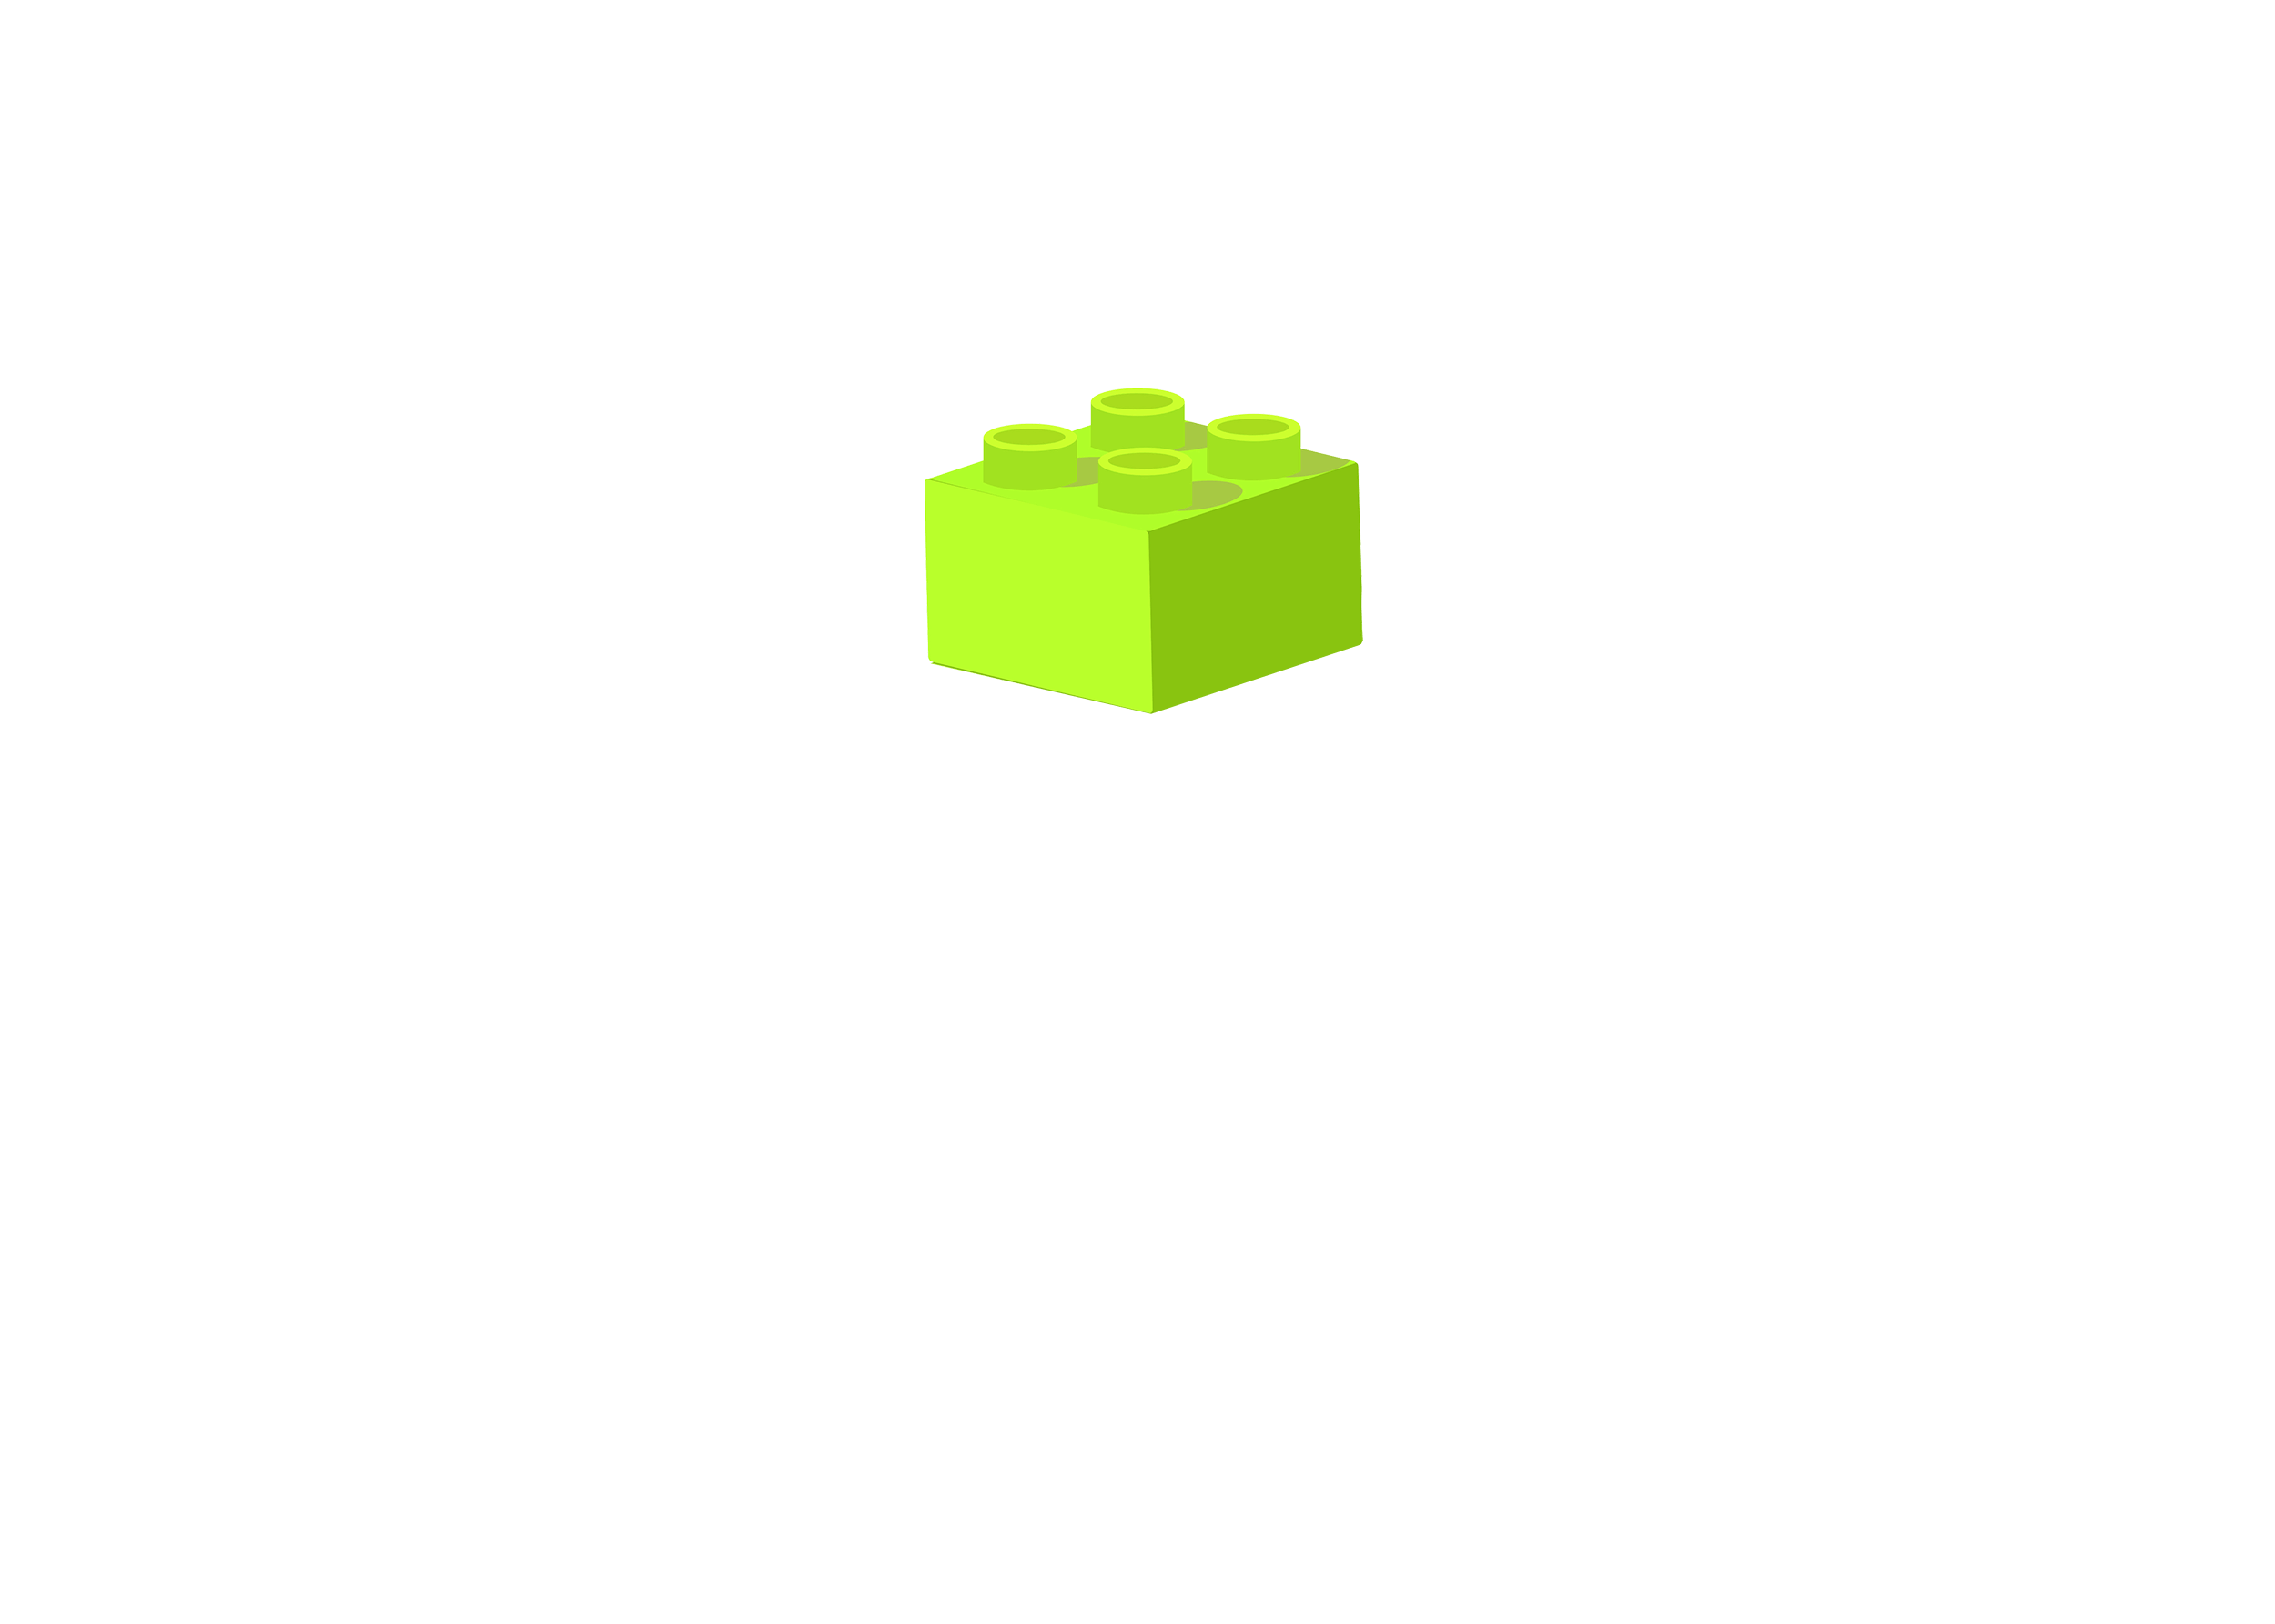 Green lego brick